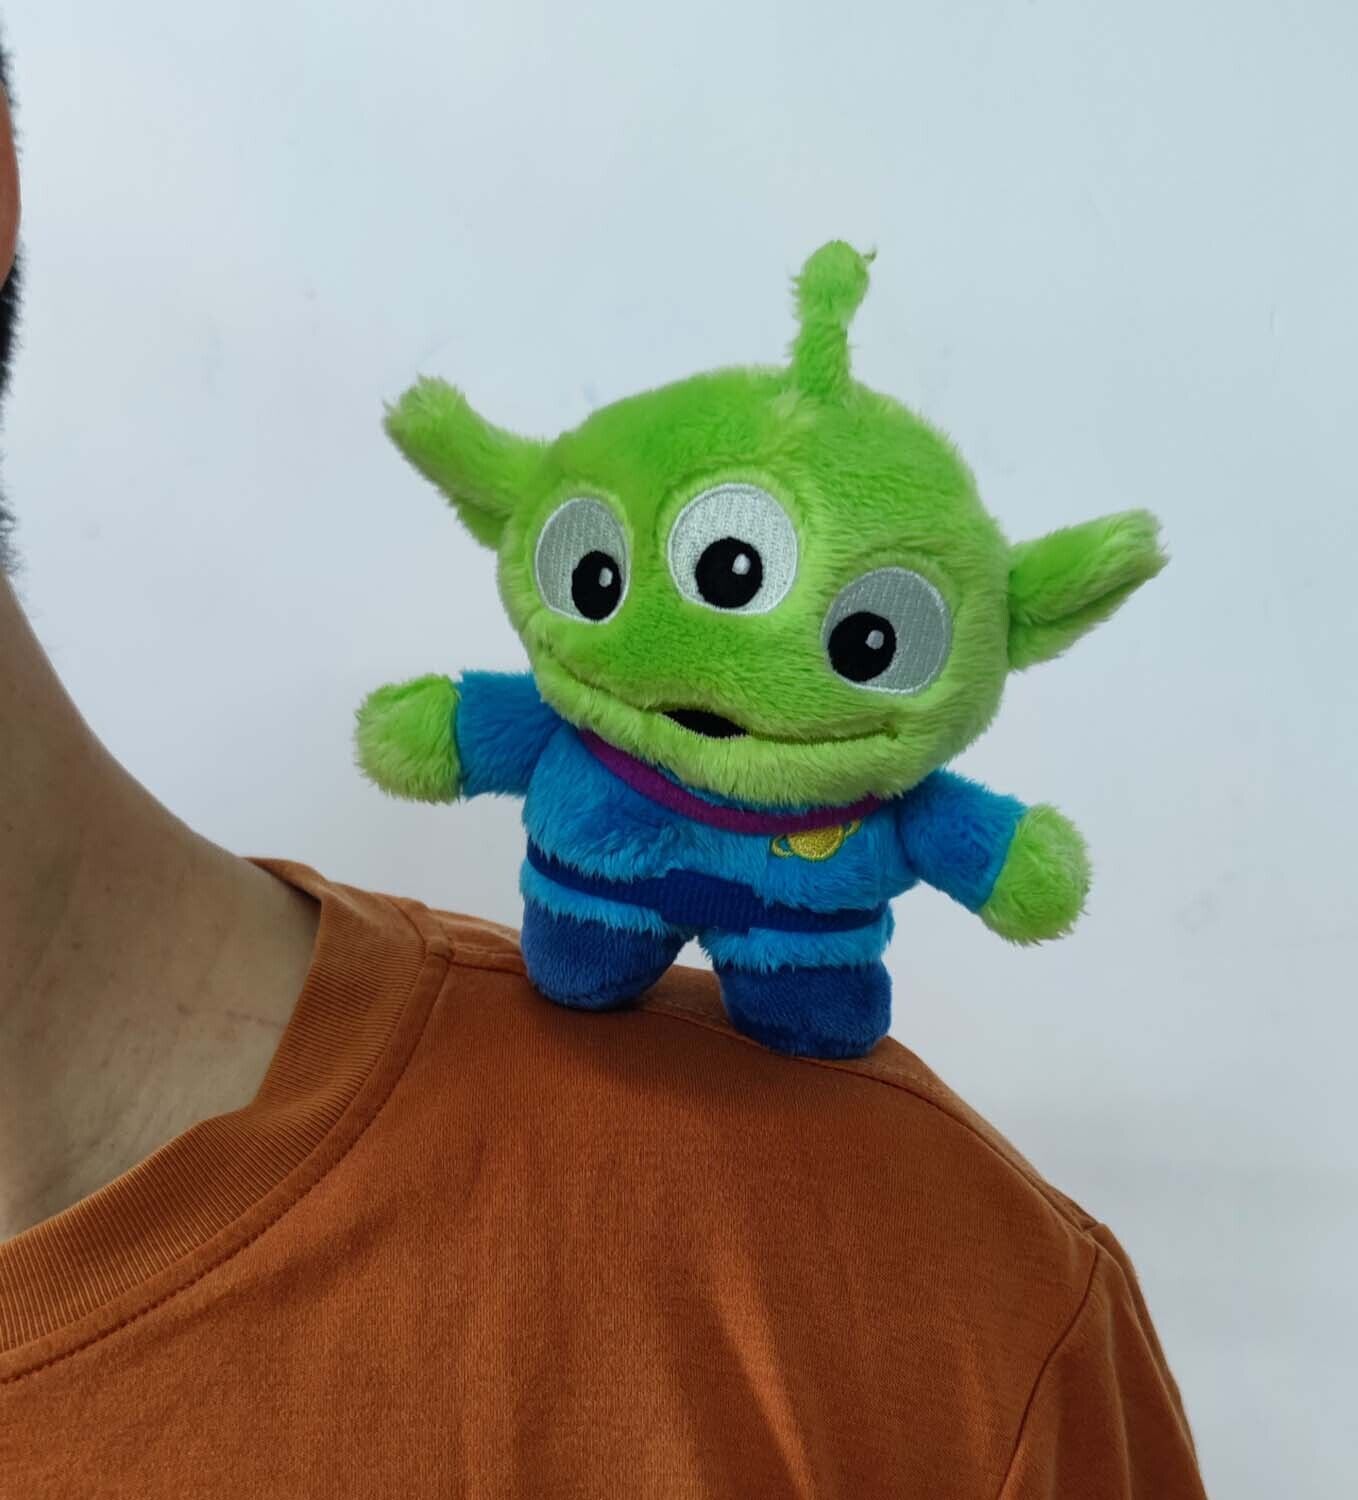 Disney Toy Story 2 Alien plush toy Shoulder Magnet doll gift new